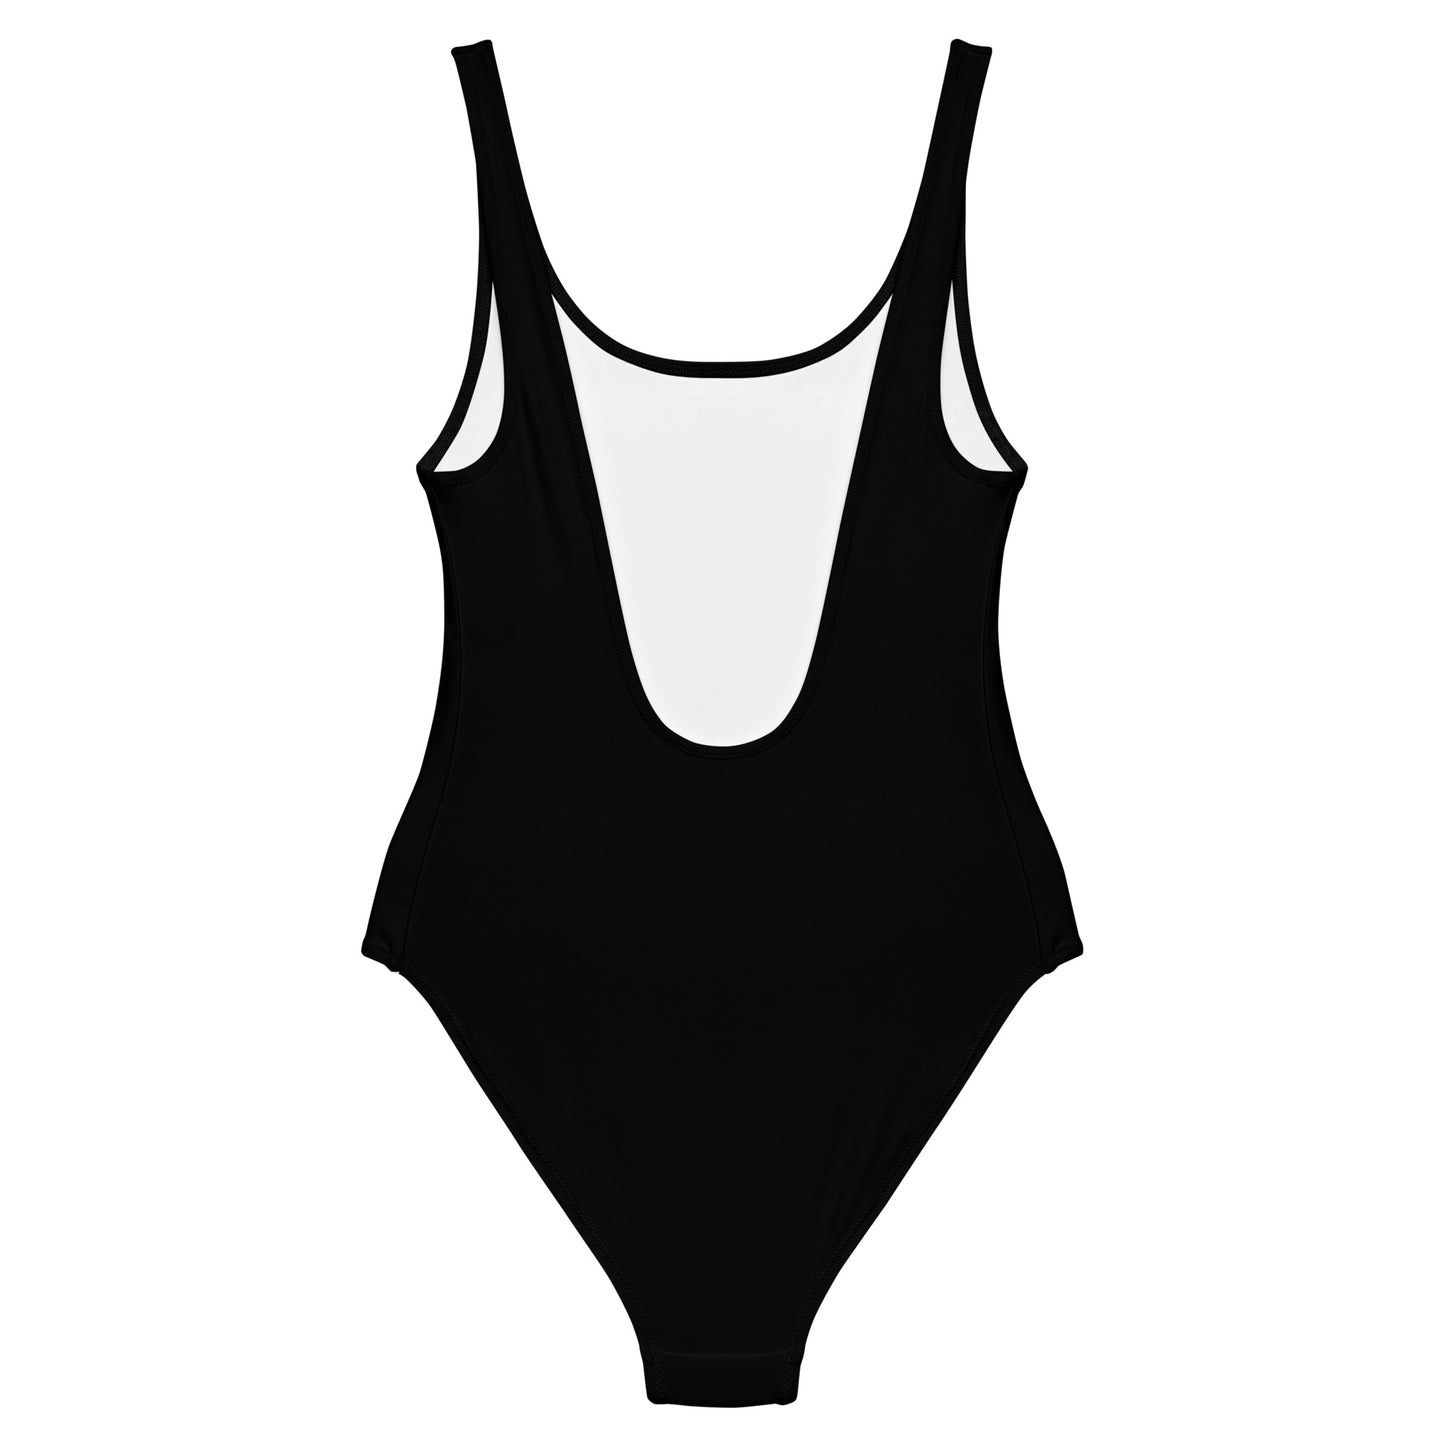 Badlands One-Piece Swimsuit in black